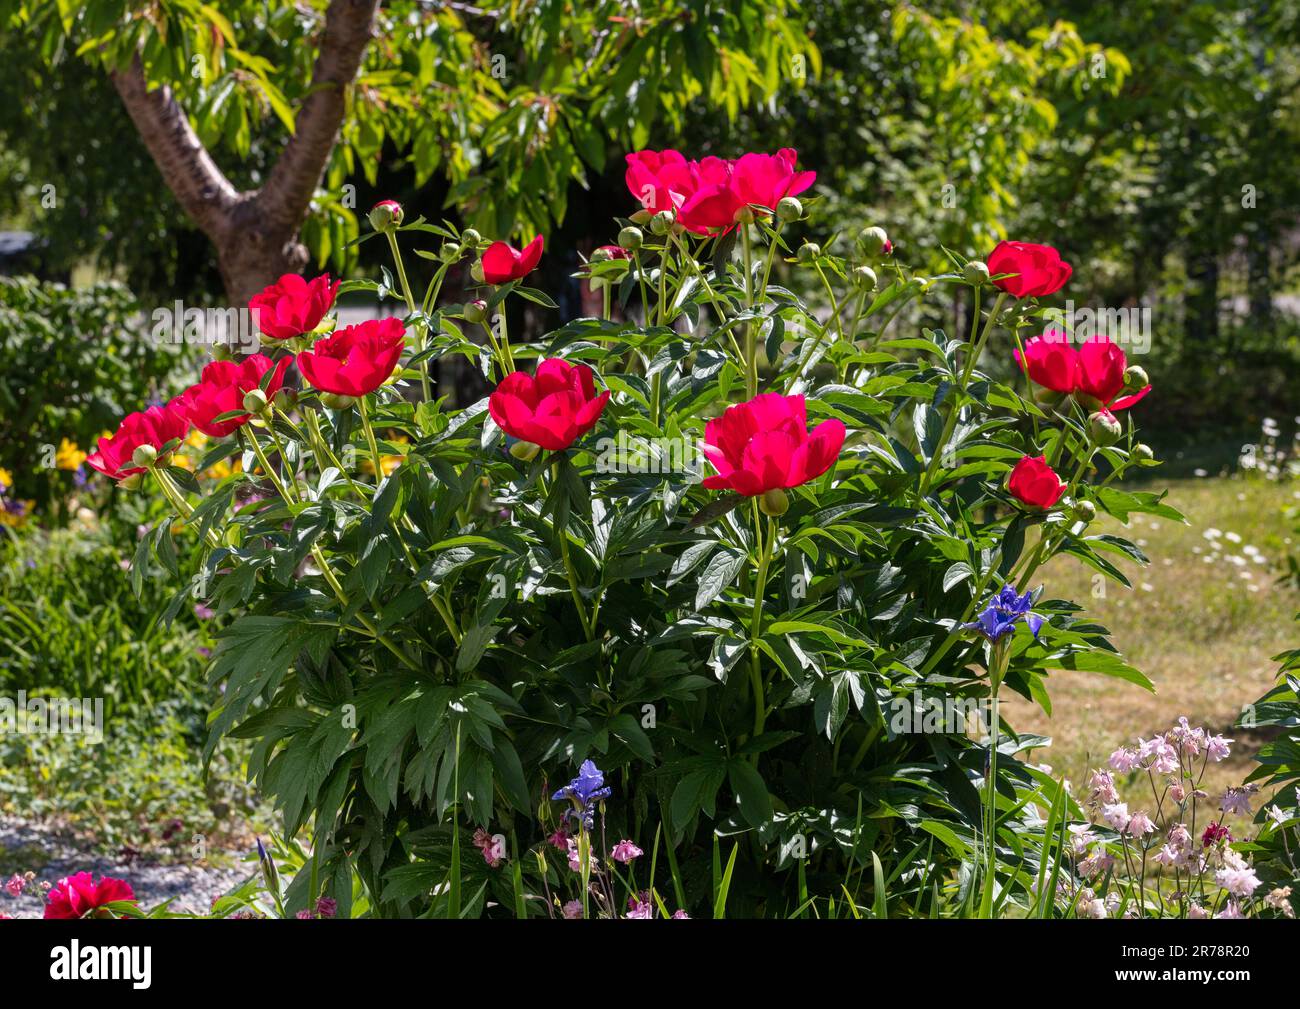 'Scarlett O'Hara' jardin commun, Luktpion la pivoine (Paeonia officinalis x Paeonia lactiflora) Banque D'Images